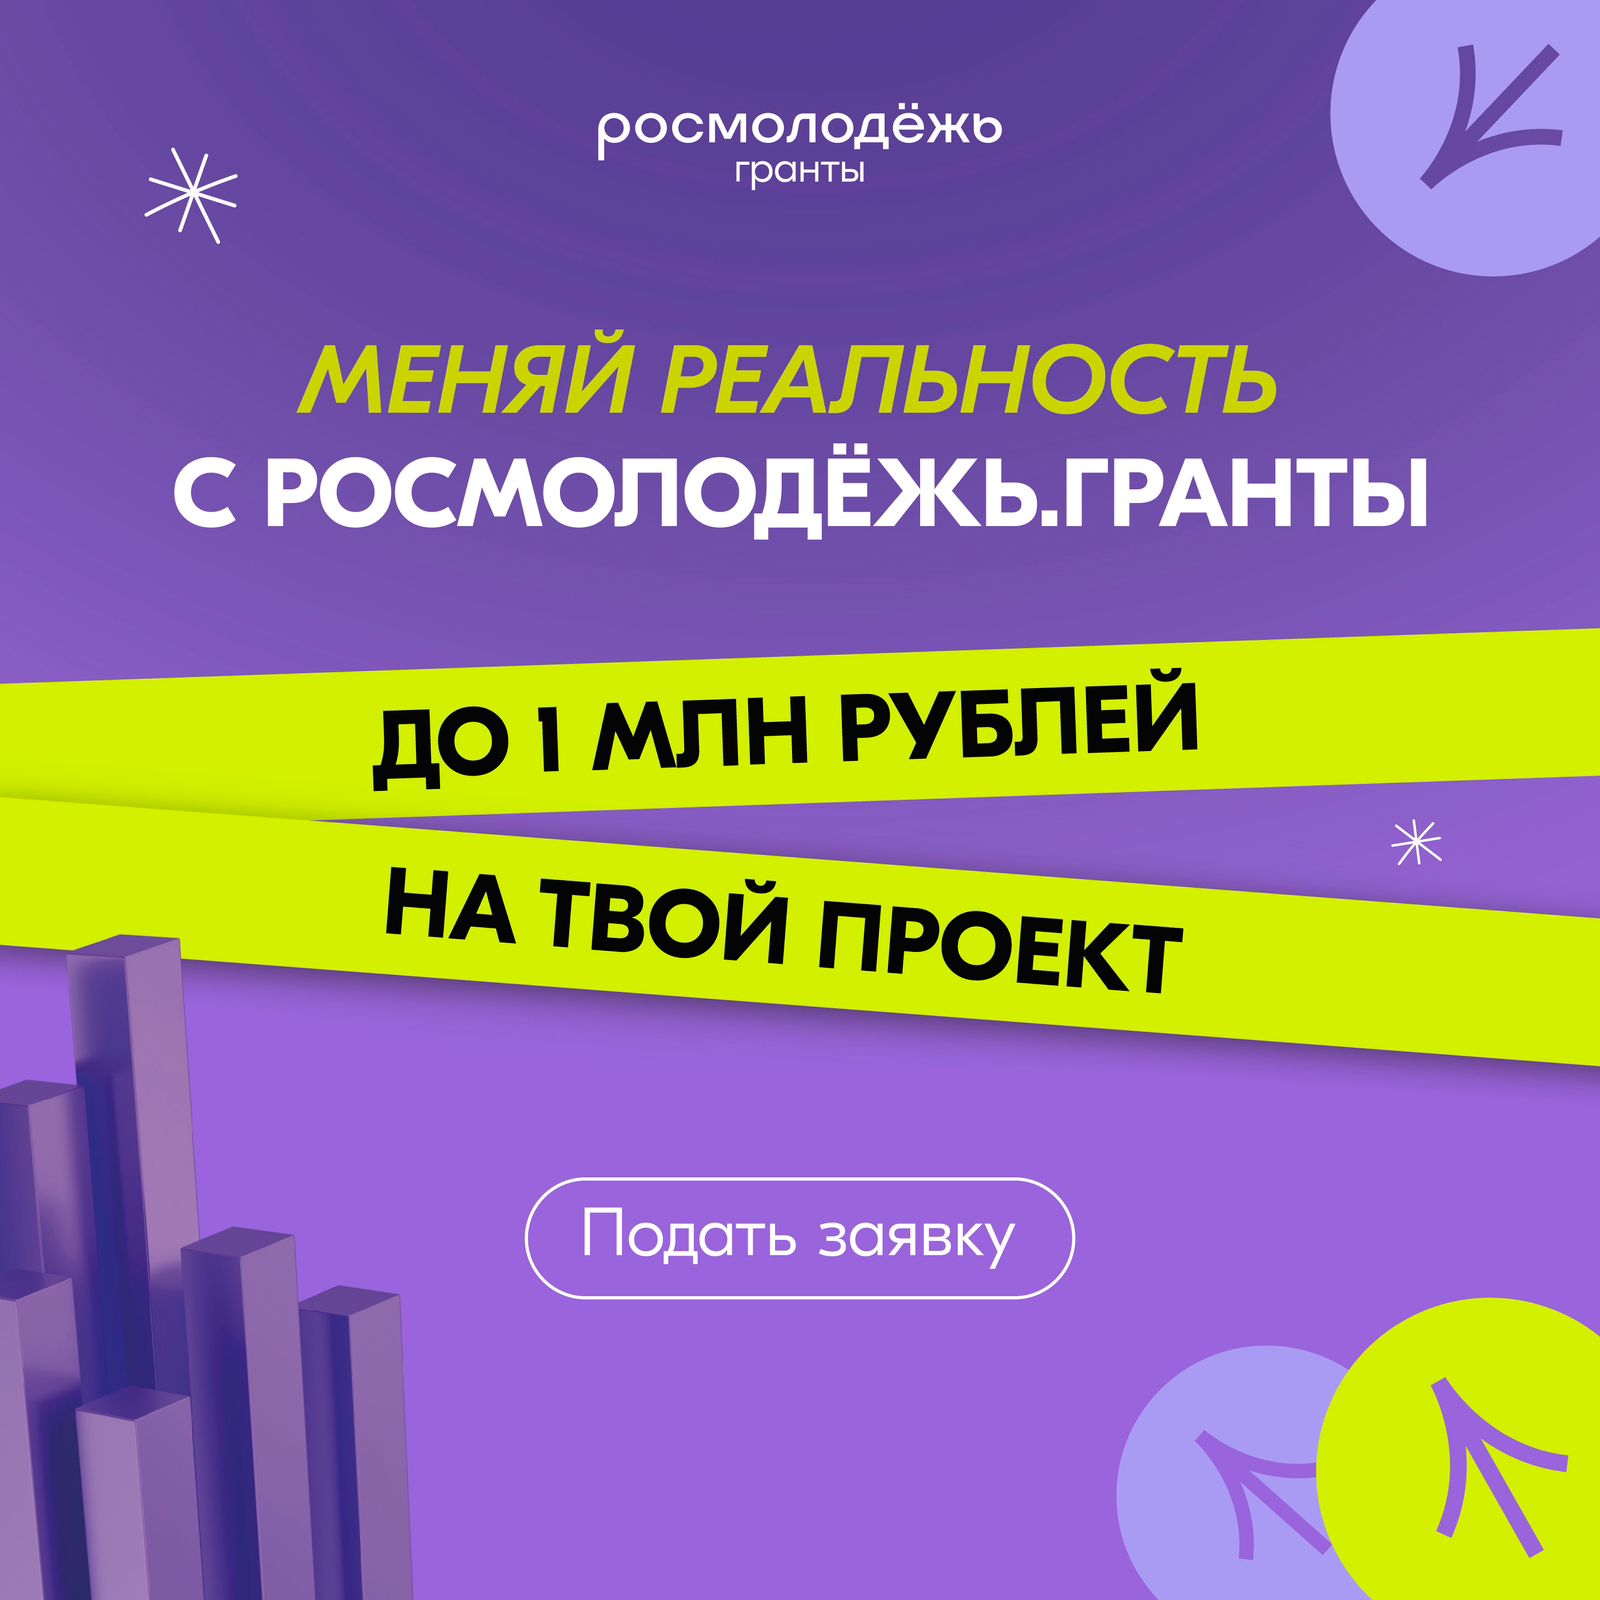 You are currently viewing Стартовал прием заявок  на конкурс Росмолодежь. Гранты